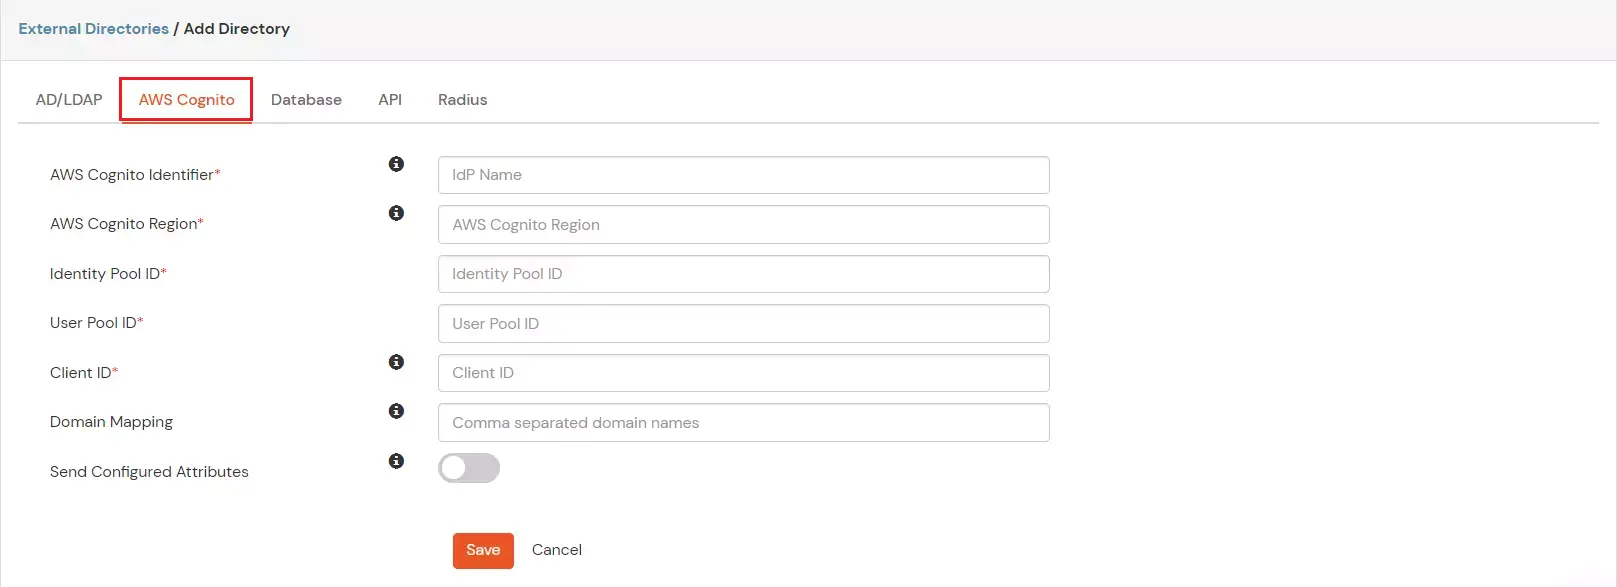 miniOrange Identity Platform Admin Handbook: Select AWS Cognito